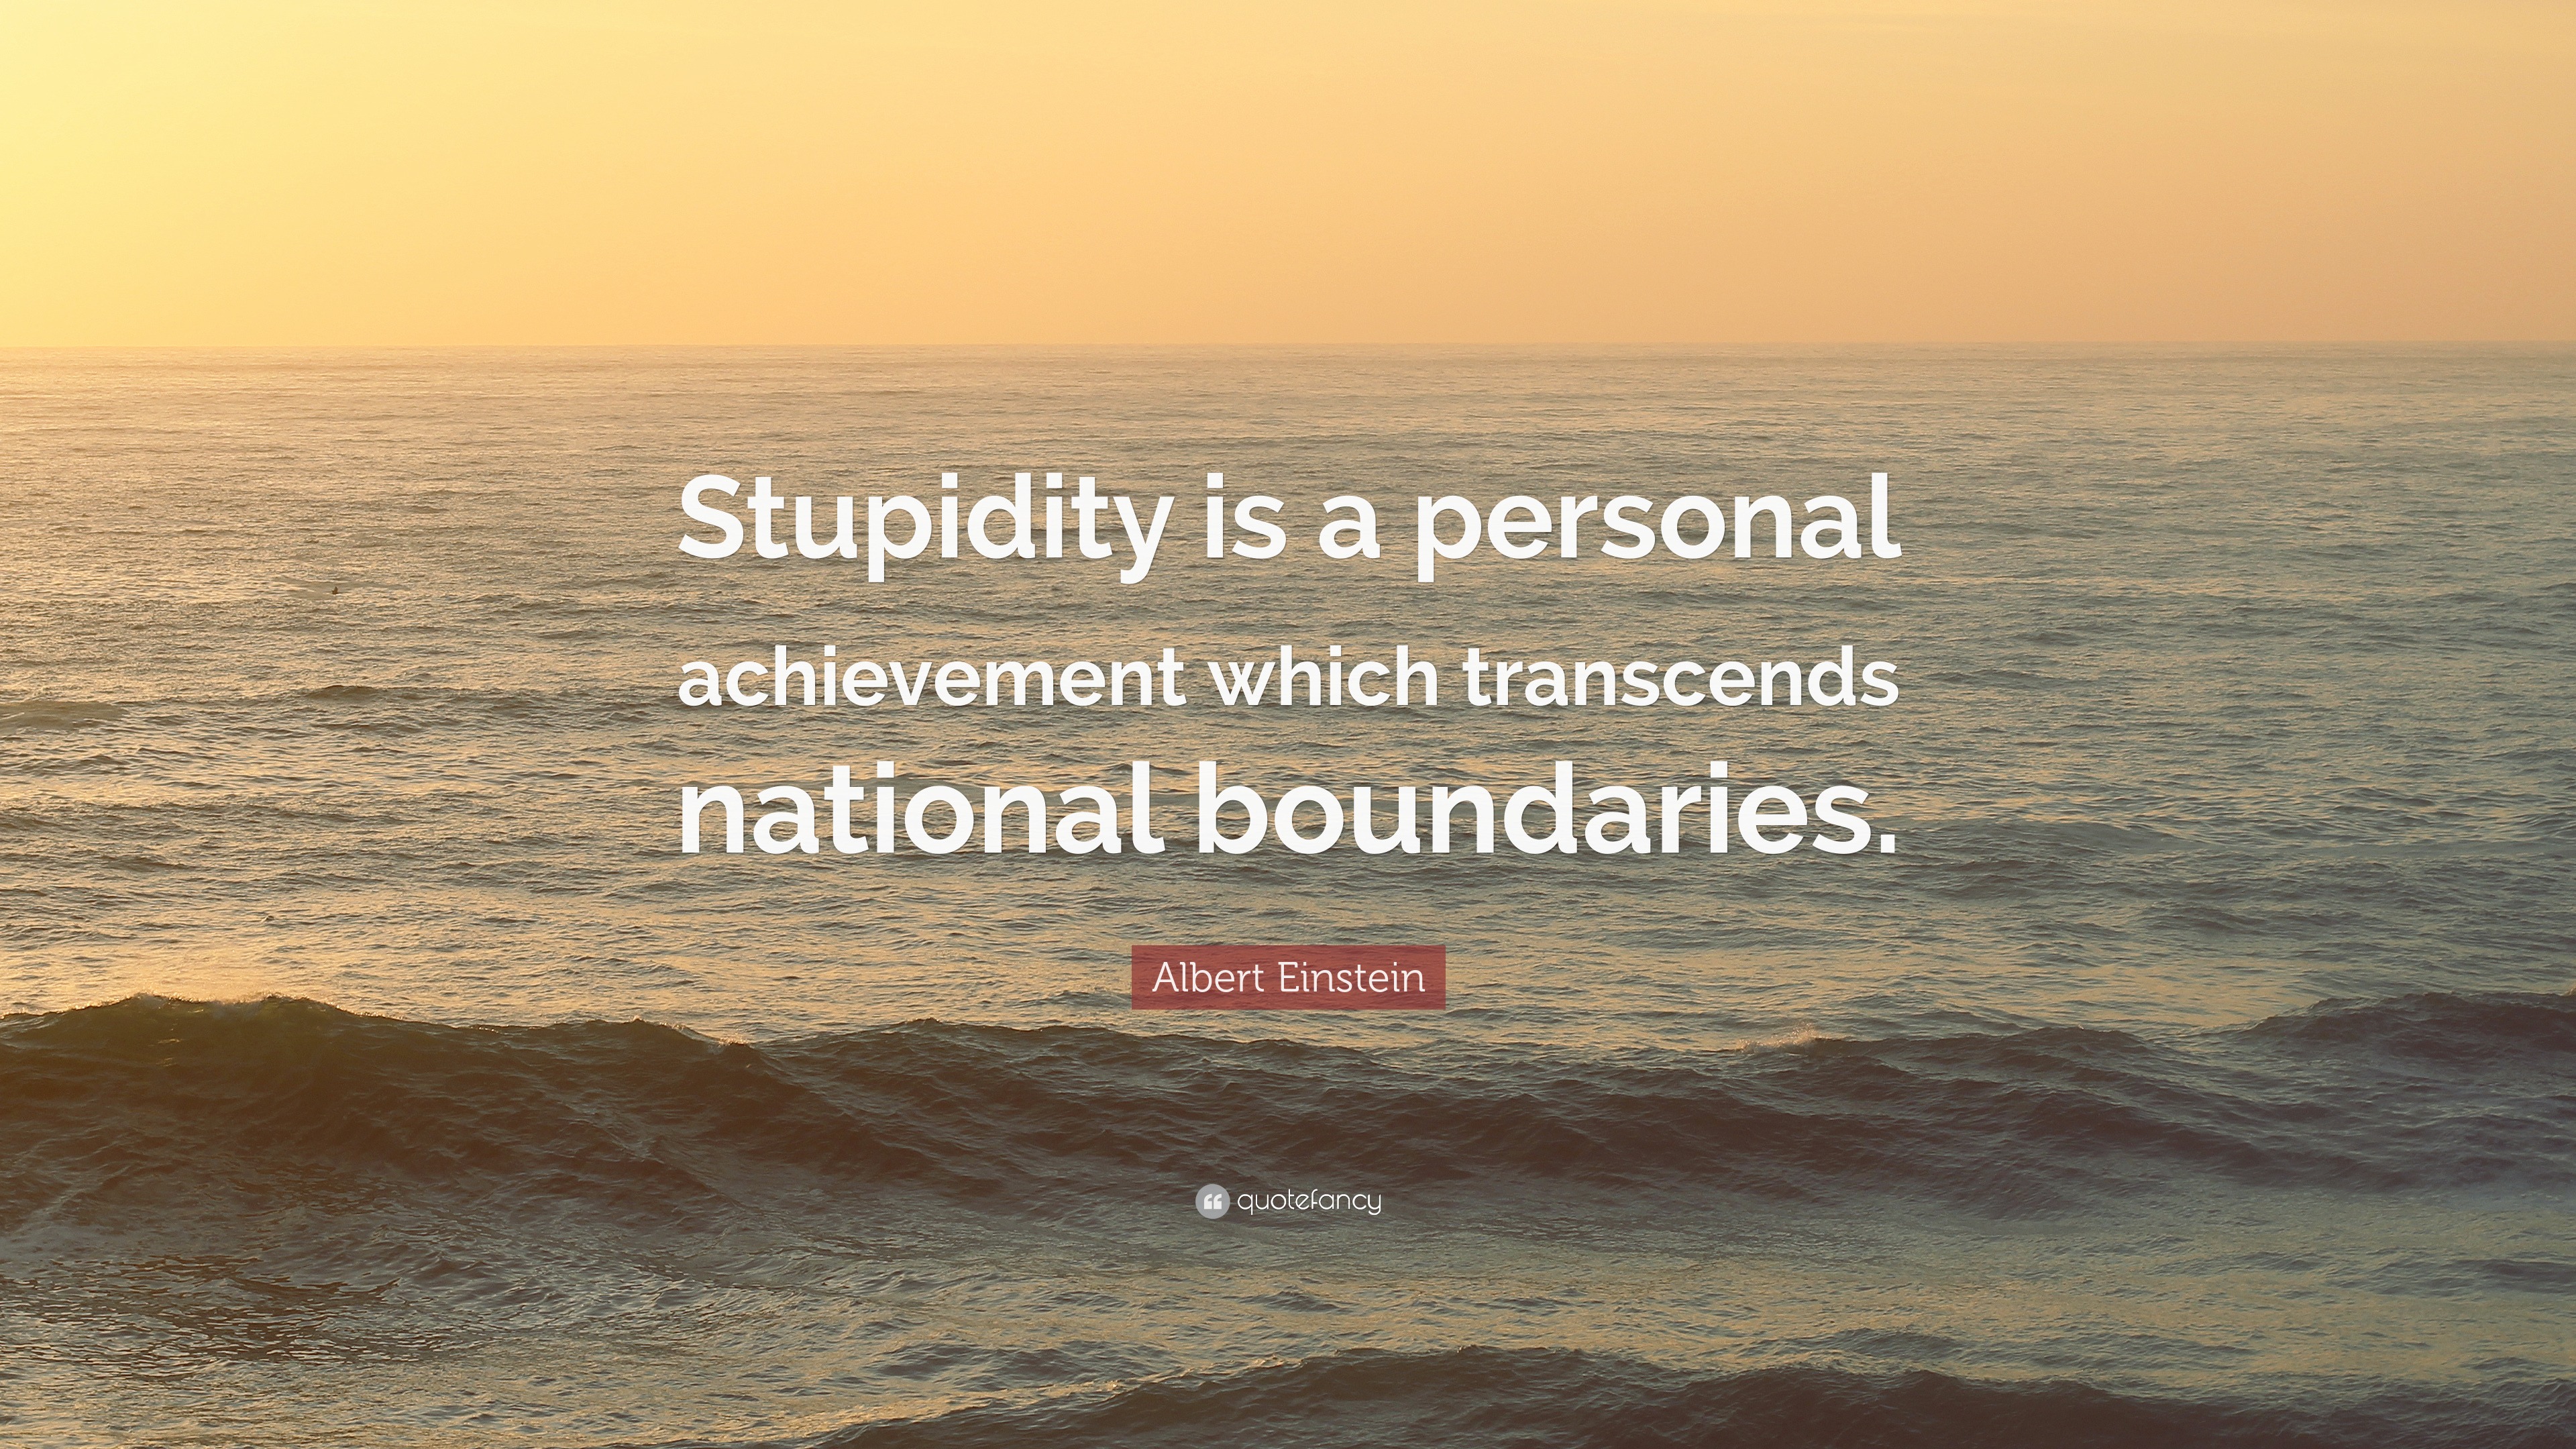 Albert Einstein Quote: "Stupidity is a personal achievement which transcends national boundaries ...